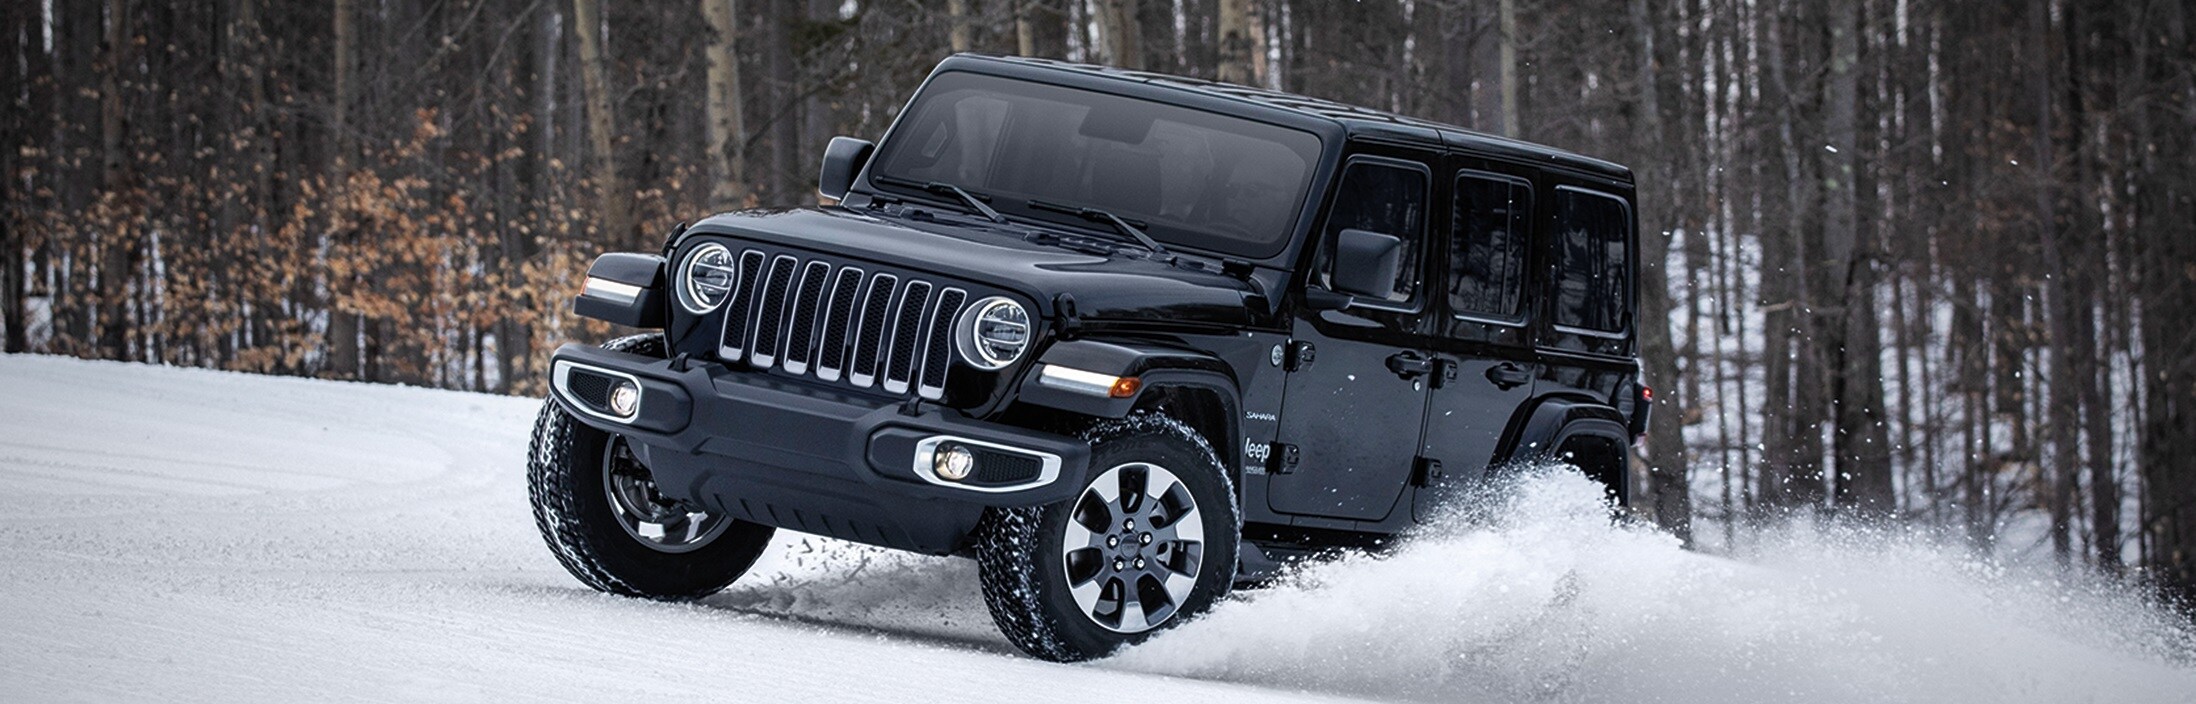 2022 Jeep Wrangler Snow